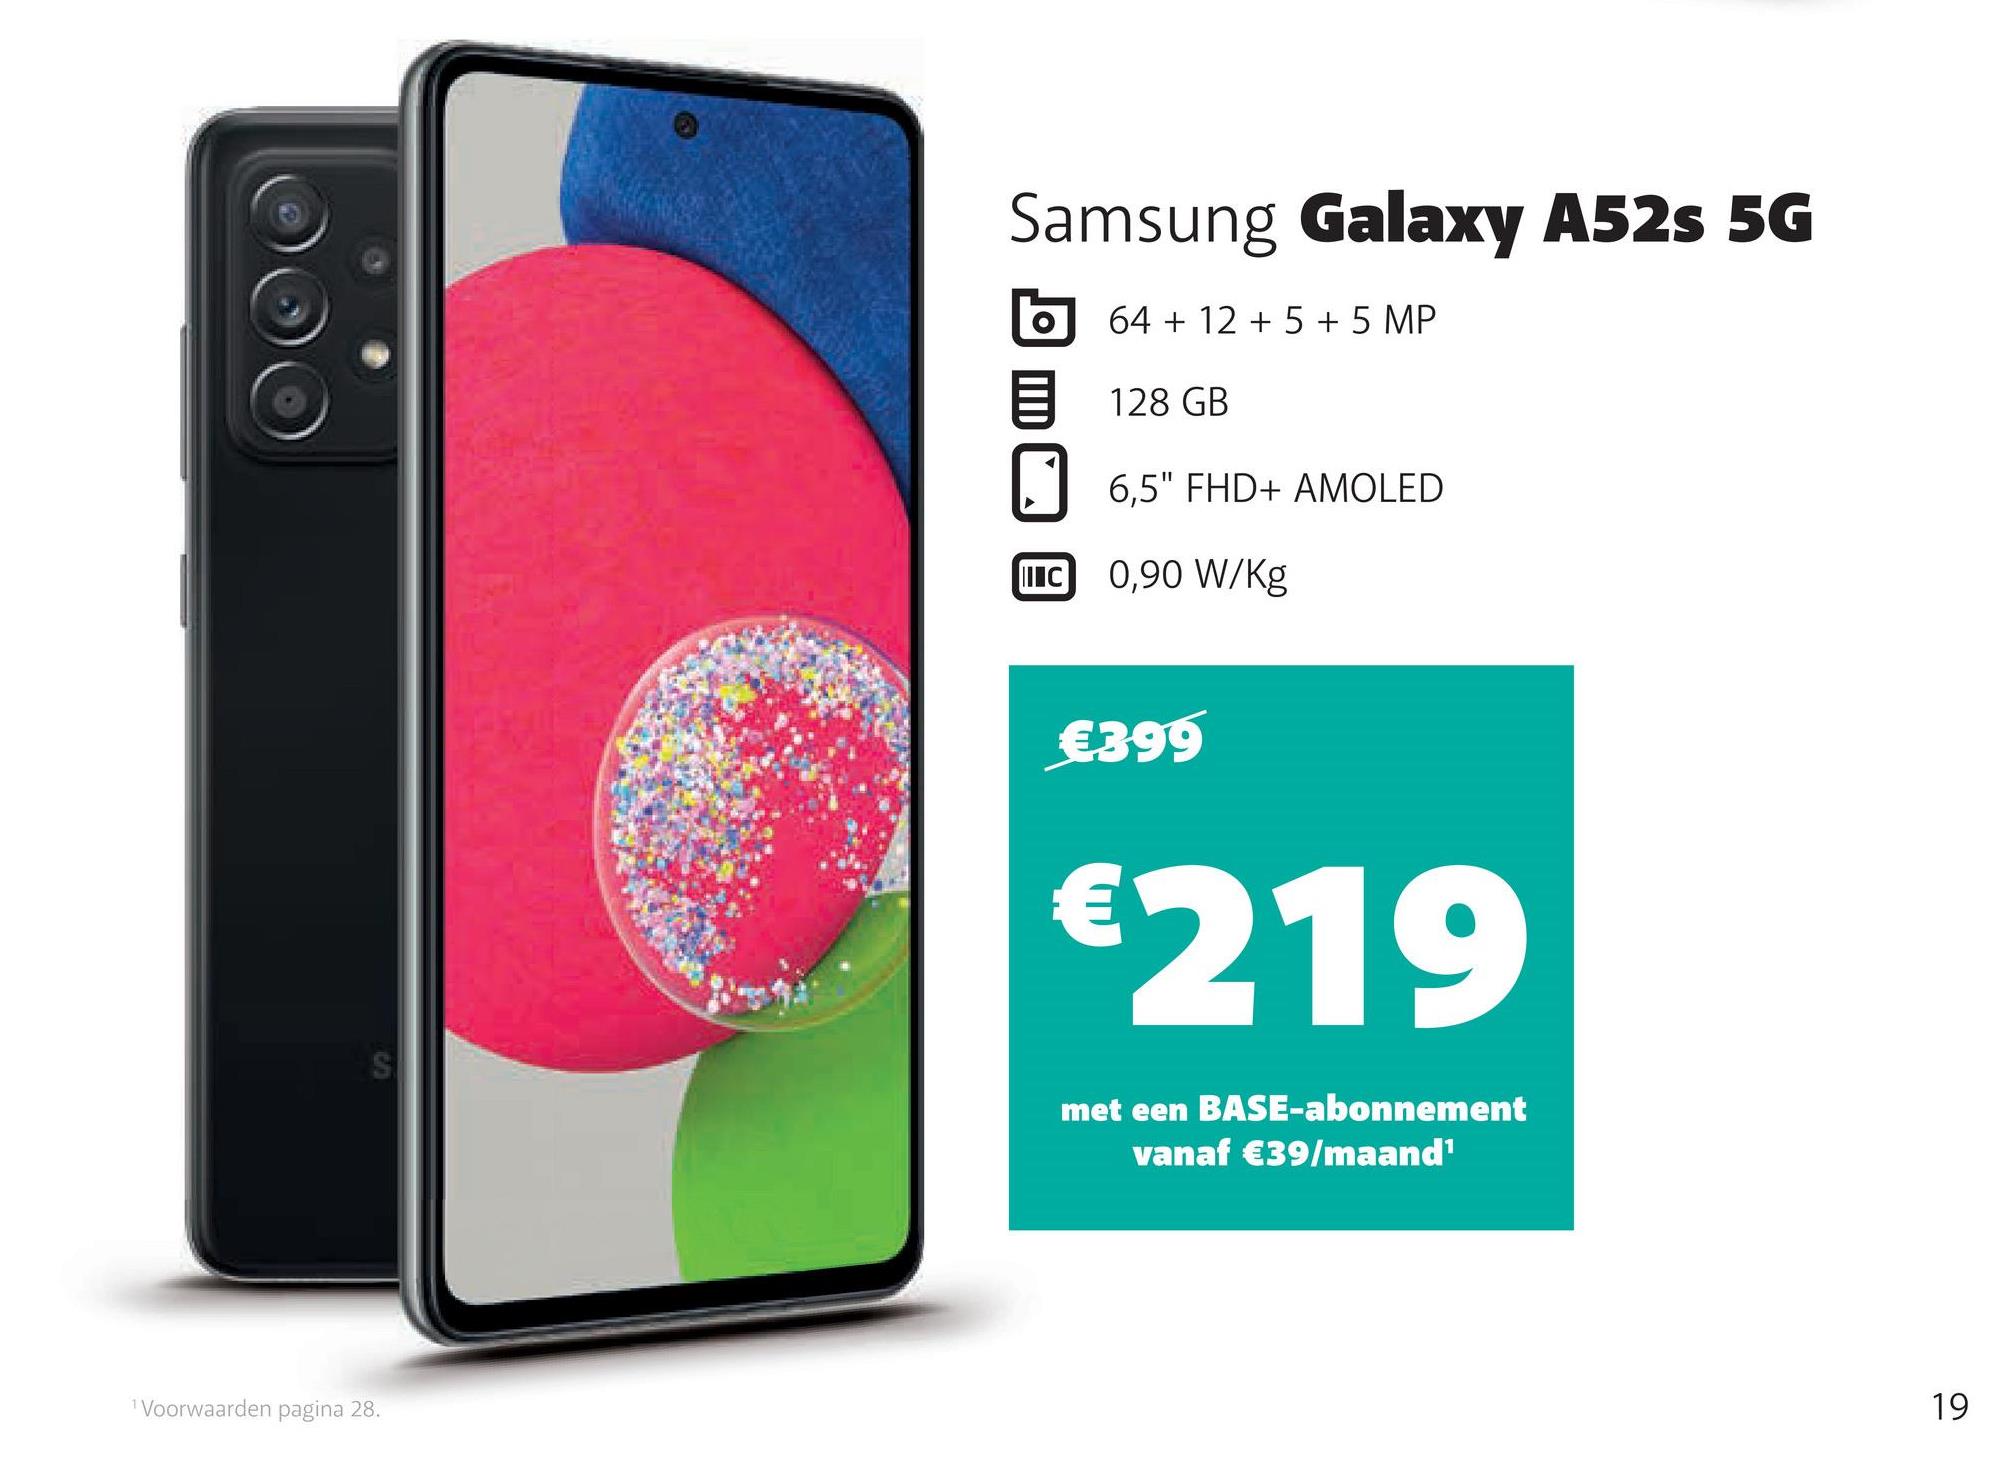 ¹ Voorwaarden pagina 28.
Samsung Galaxy A52s 5G
64 + 12 + 5 + 5 MP
128 GB
6,5" FHD+ AMOLED
IC 0,90 W/kg
€399
€219
met een BASE-abonnement
vanaf €39/maand¹
19